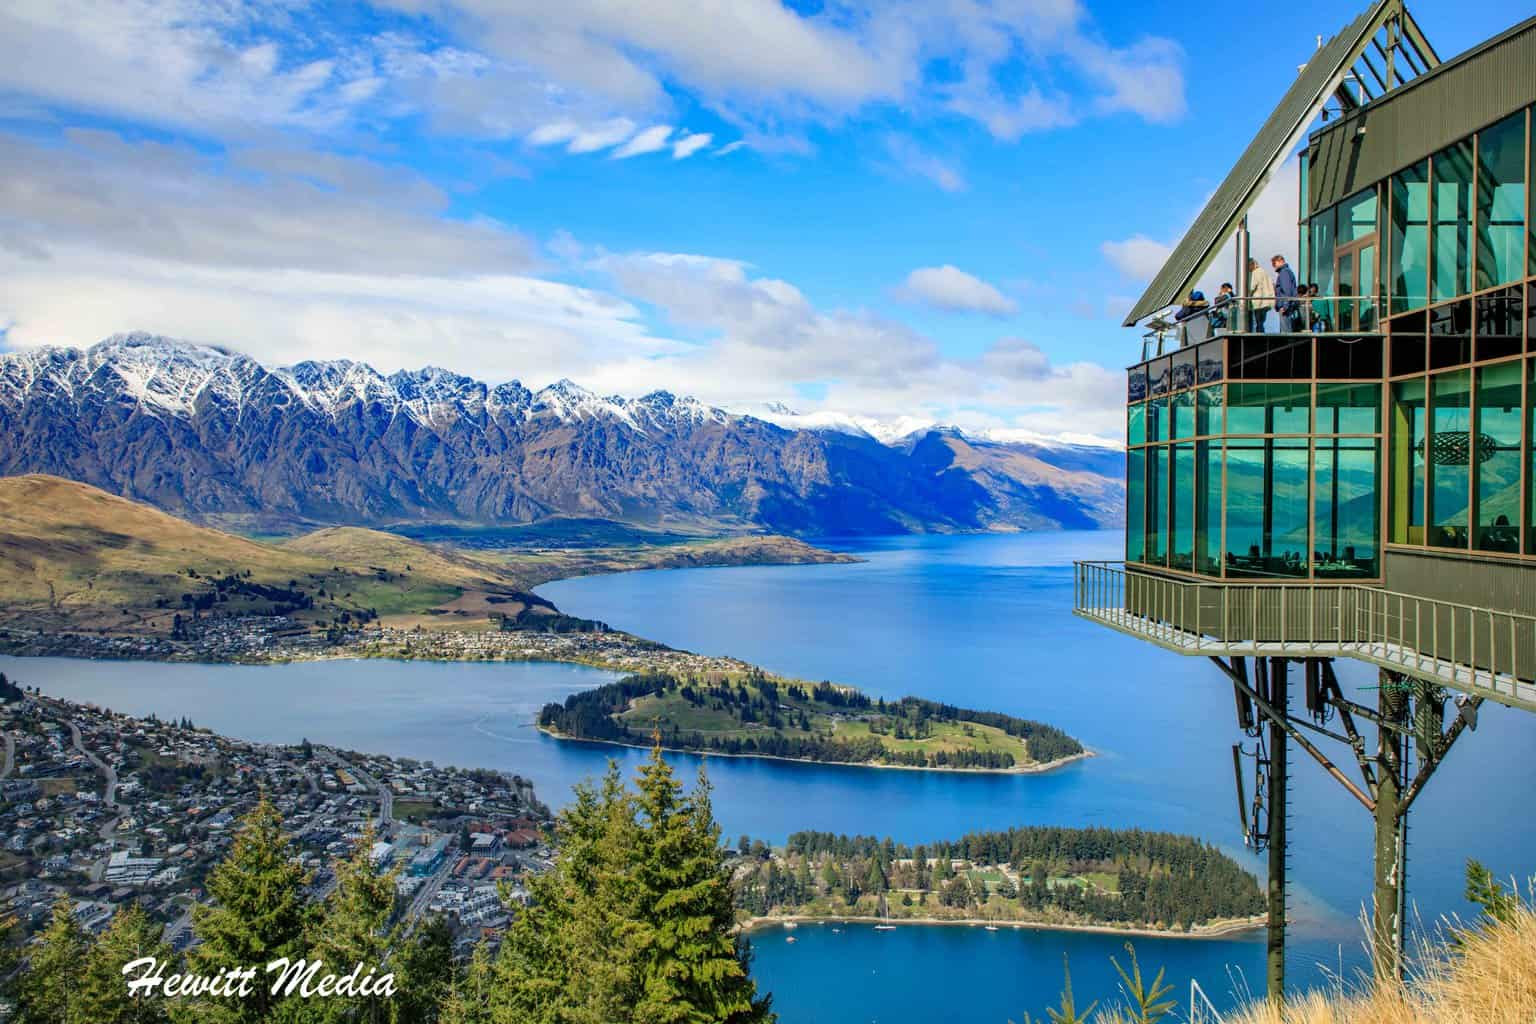 You can bungee jump off kawarau bridge, hike breathtaking. The Essential Queenstown New Zealand Travel Guide